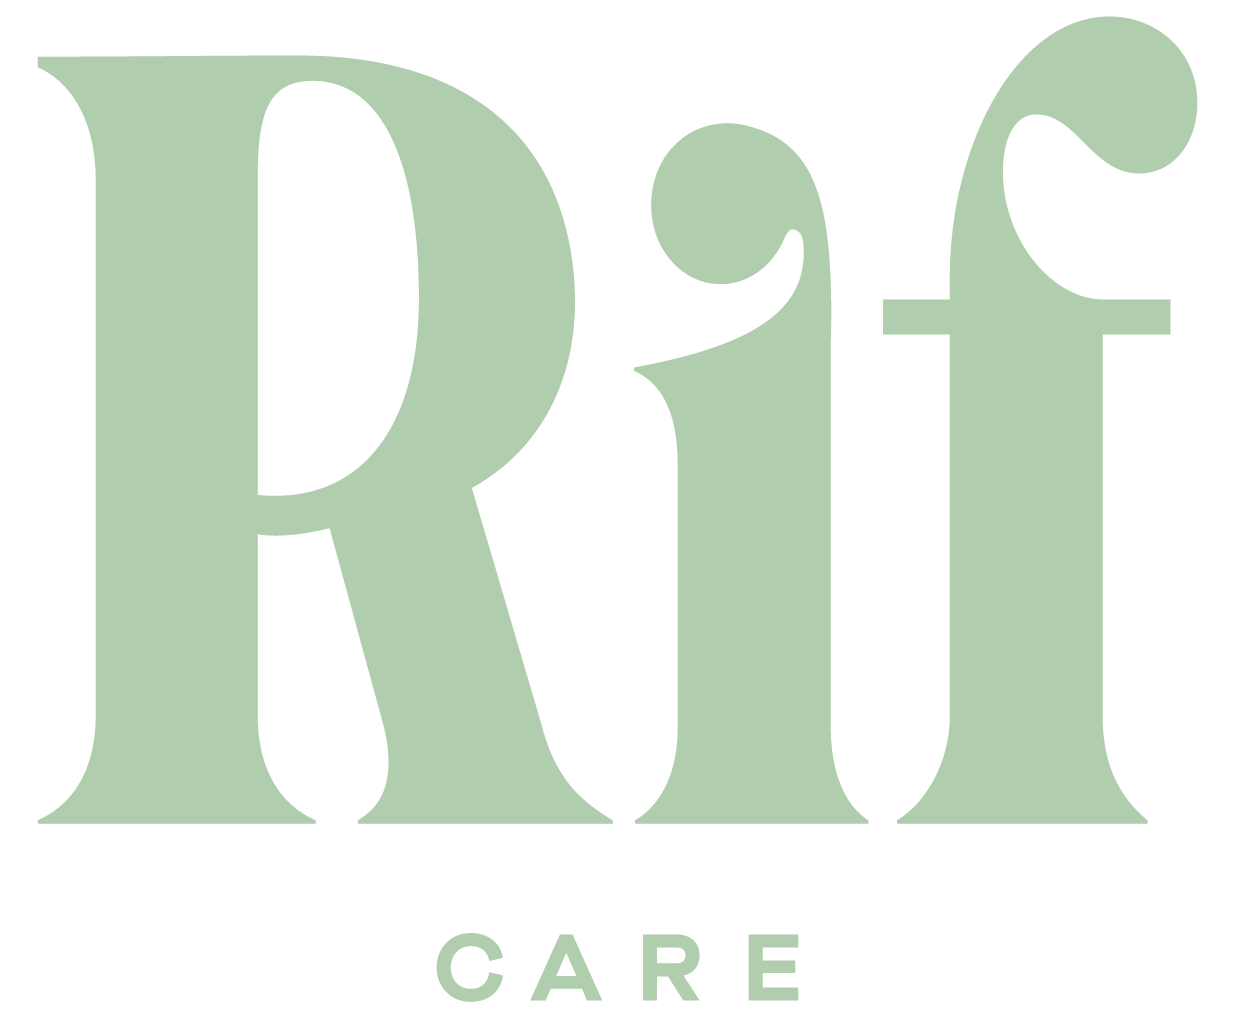 Brand: Rif Care – Pretty Well Beauty